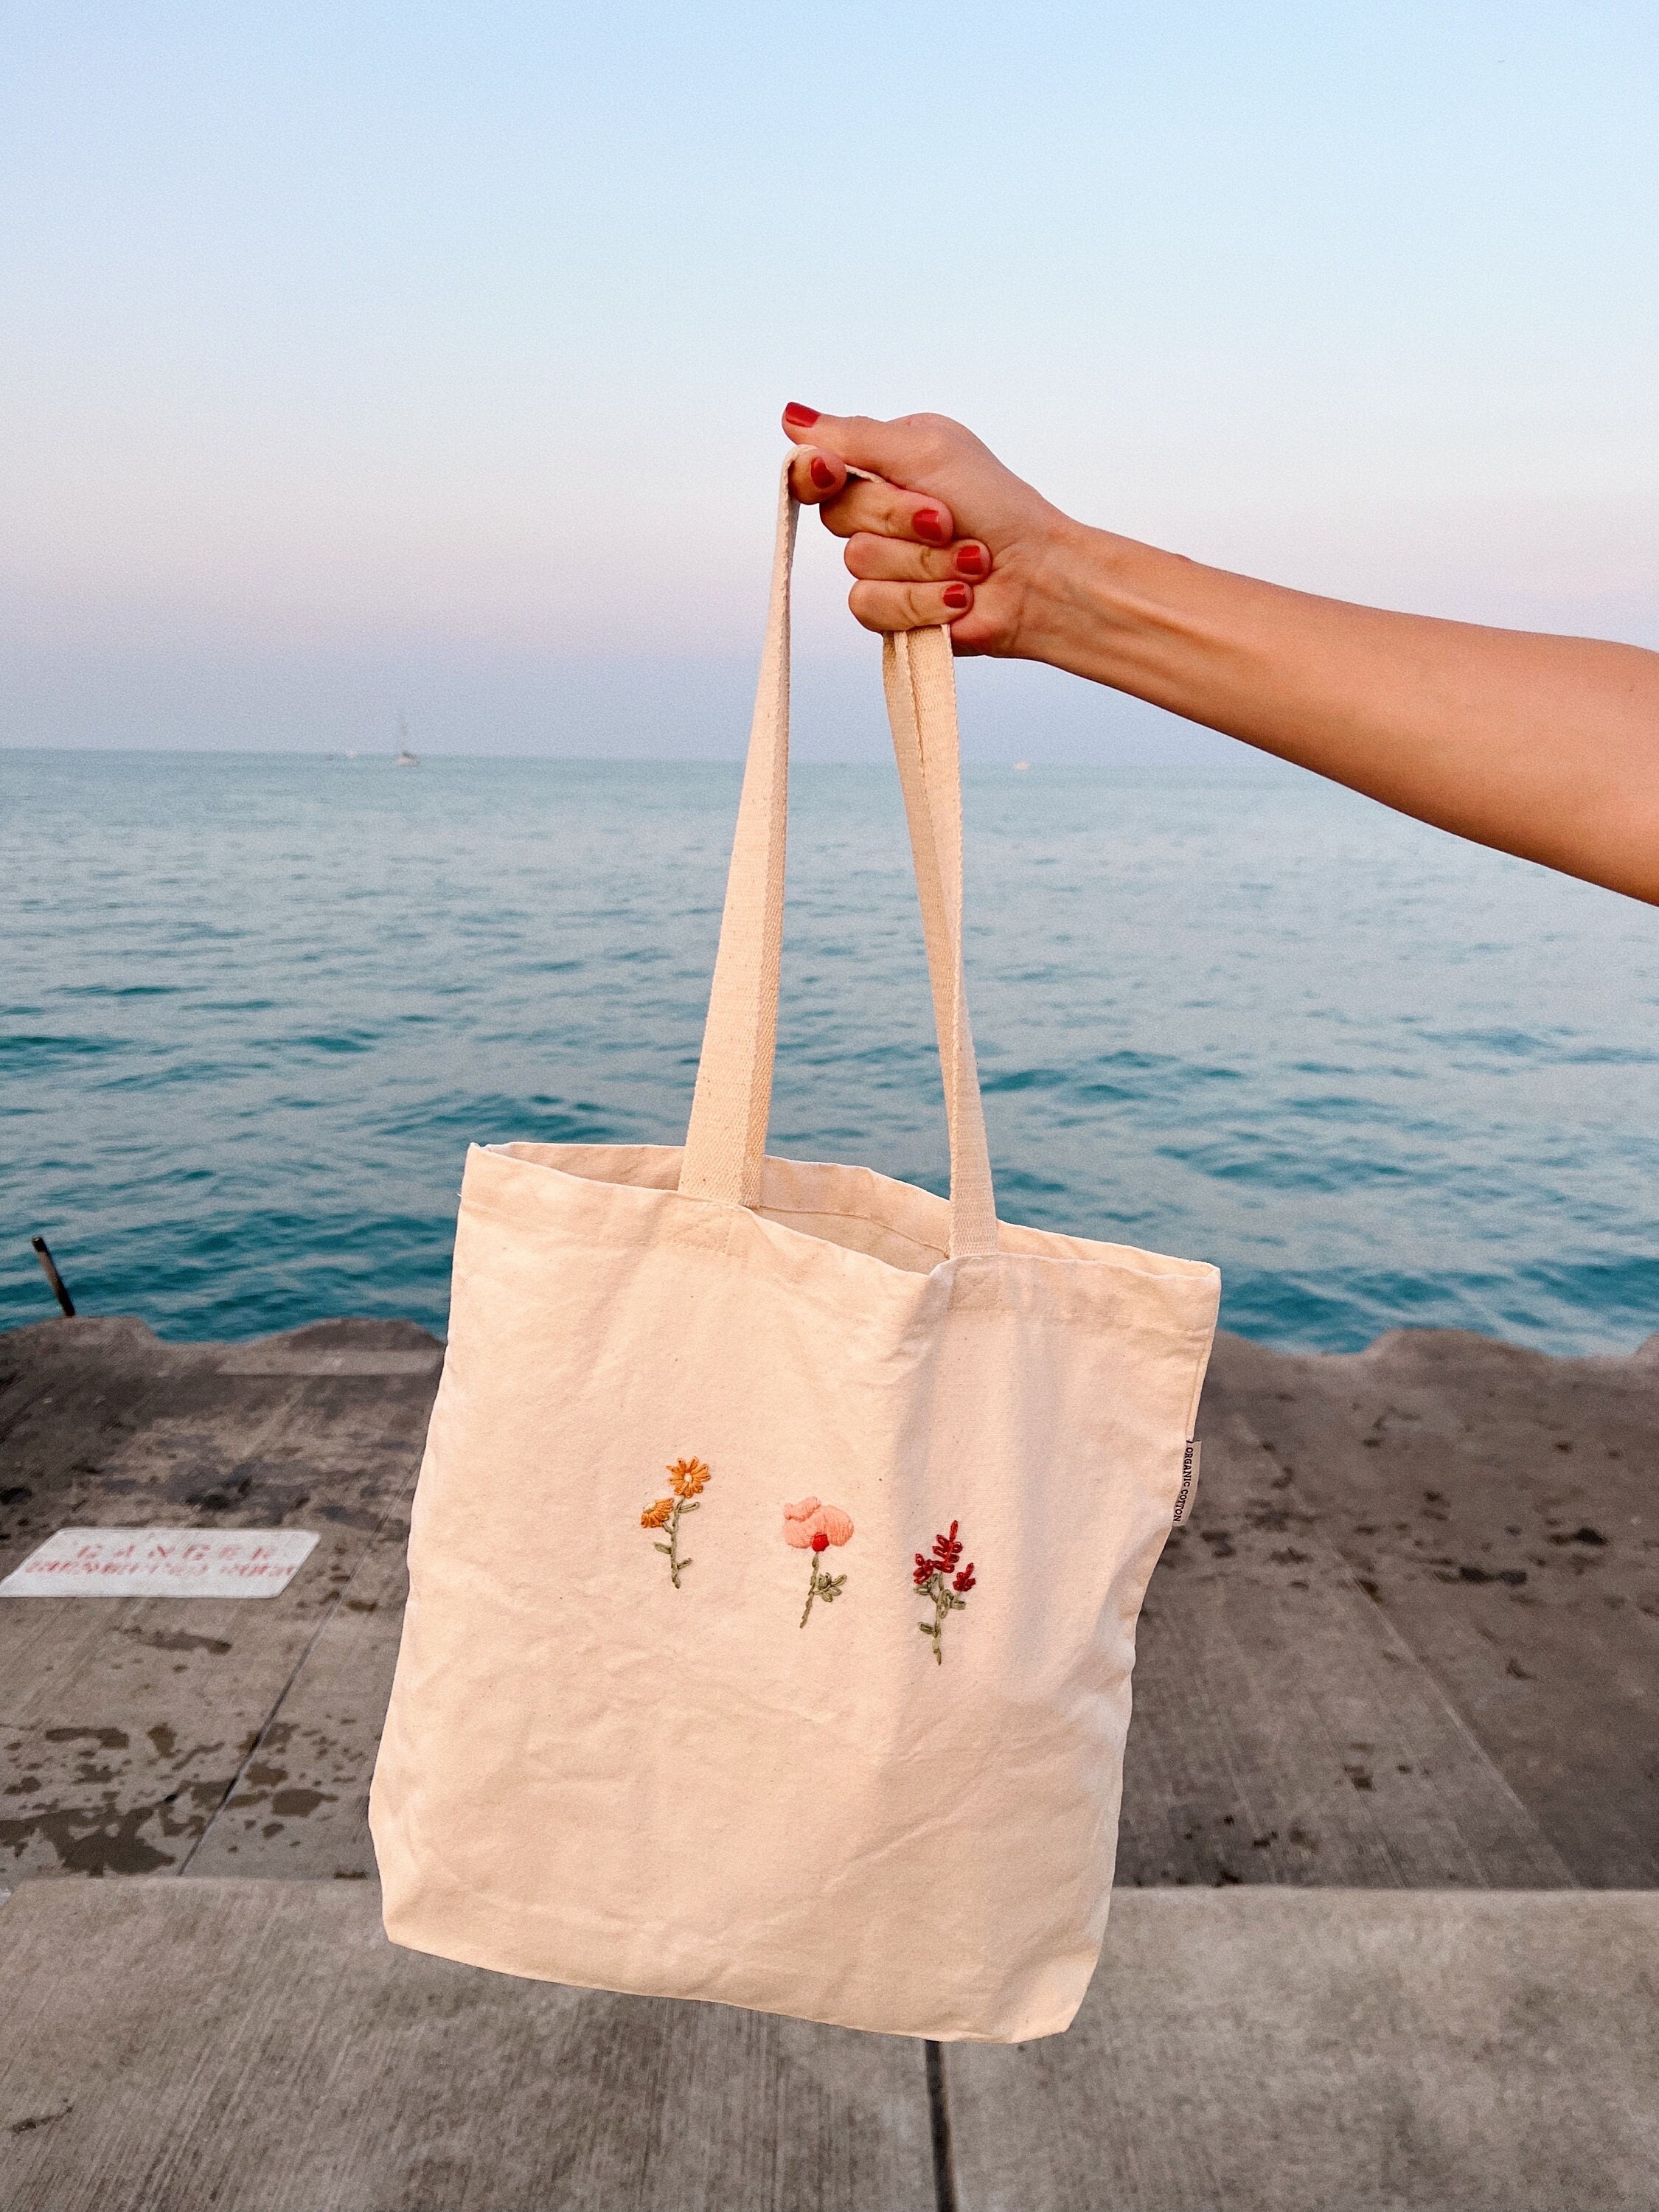 Floral Tote Bag, Wildflowers Tote Bag, Bag Aesthetic, Organic